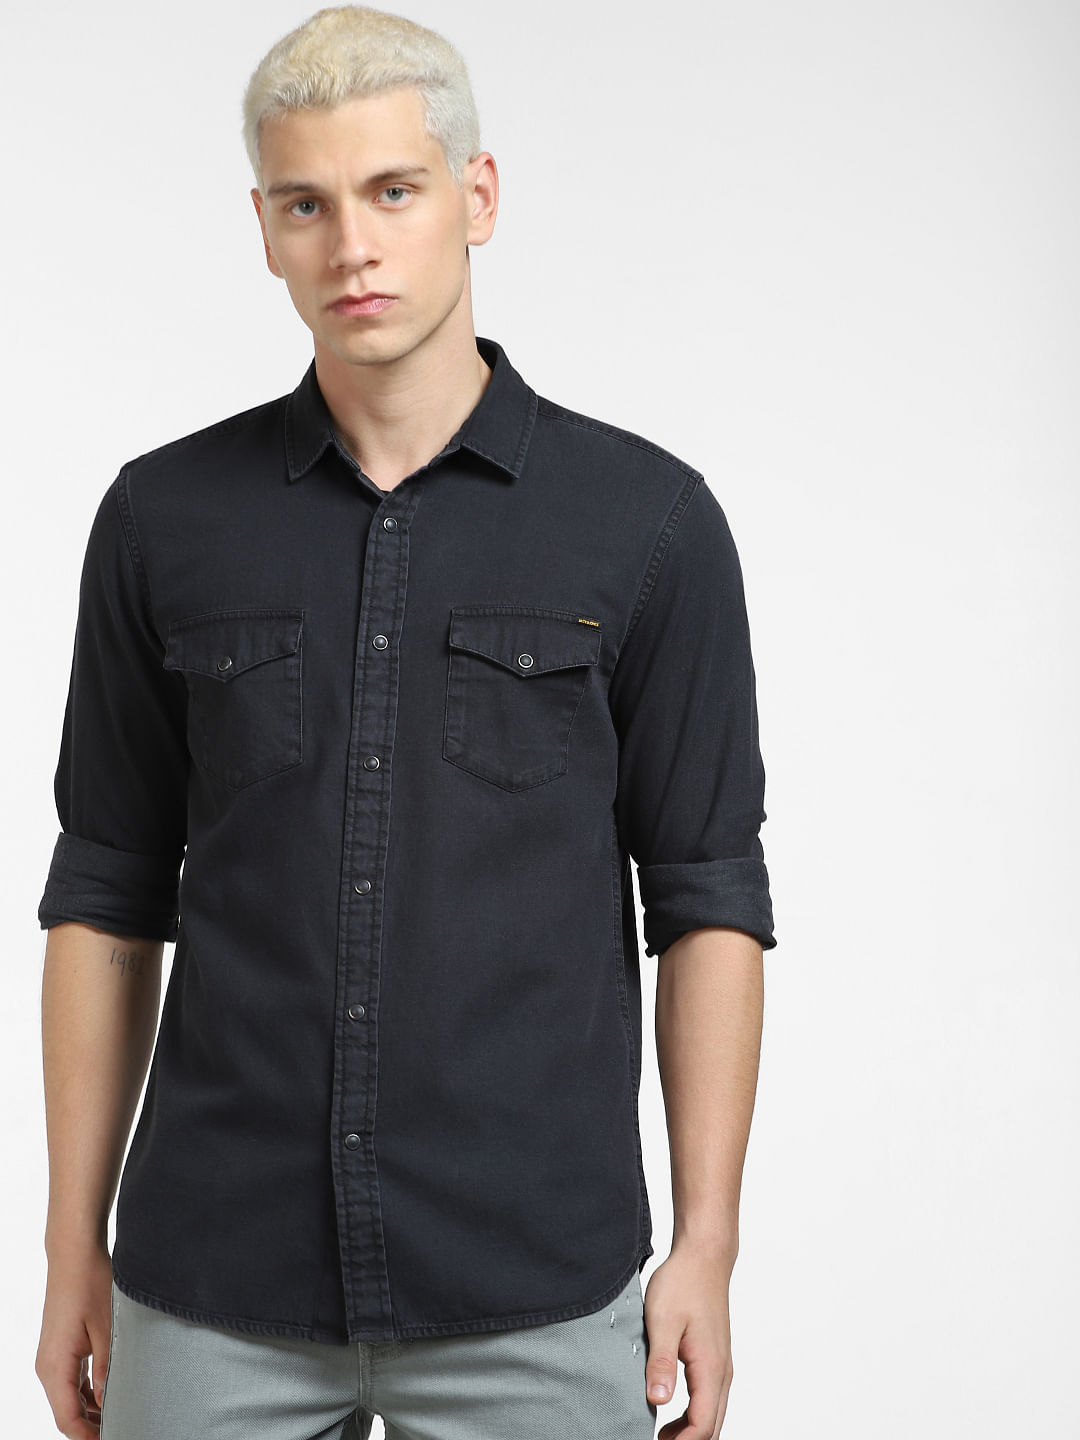 How can I age/distress this black denim shirt? : r/fashion